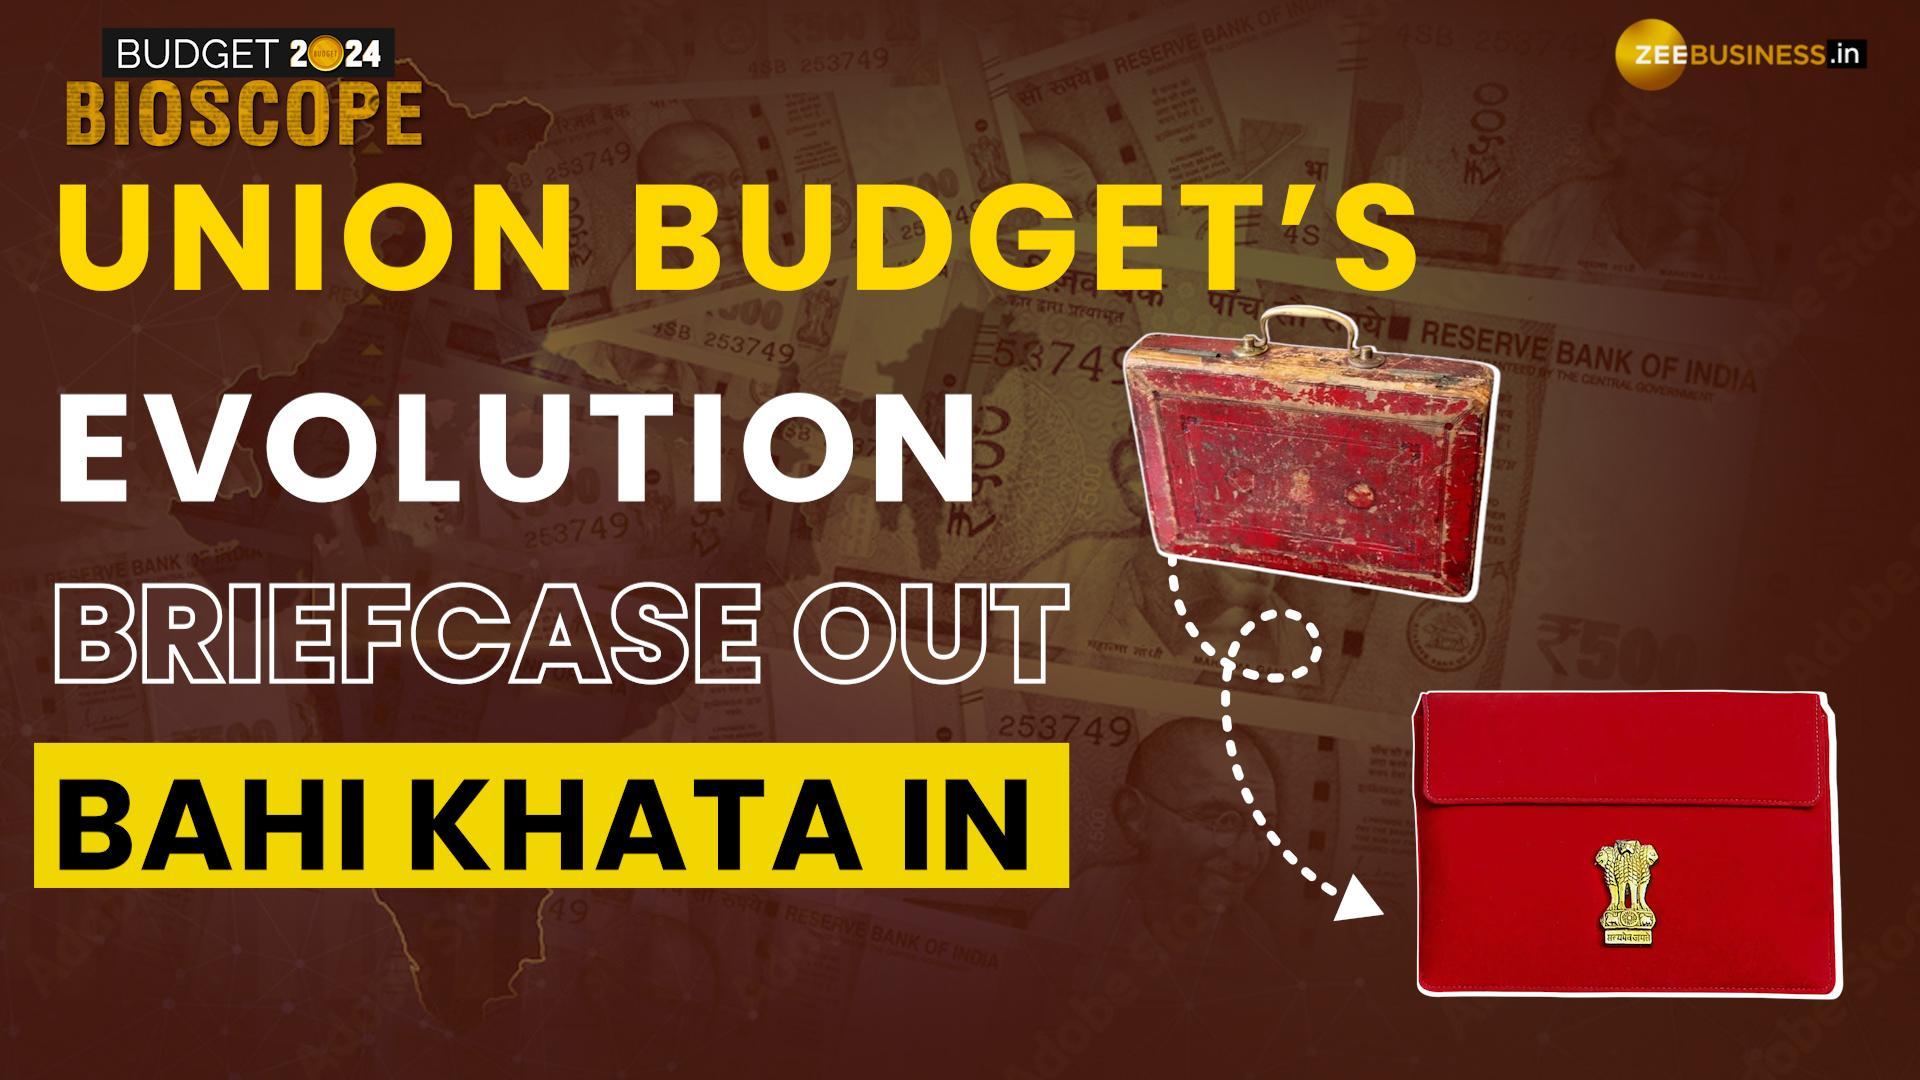 Budget 2024: Briefcase to Bahi Khata – A Modern Evolution of India's Budget Tradition 